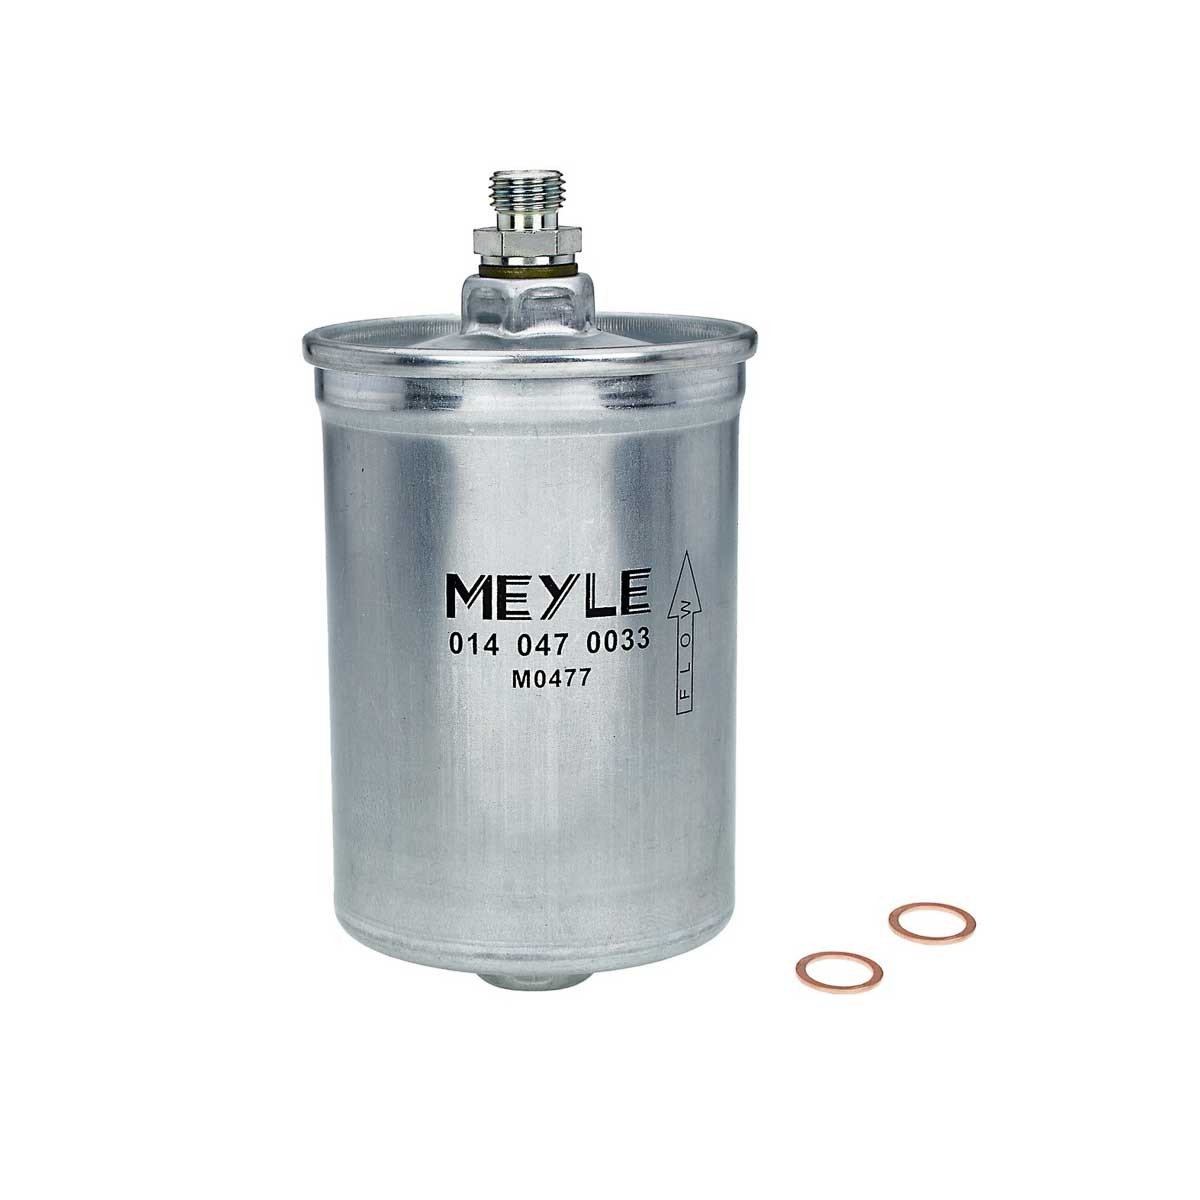 MFF0009 MEYLE 0140470033 Fuel filter A 002 477 45 01.